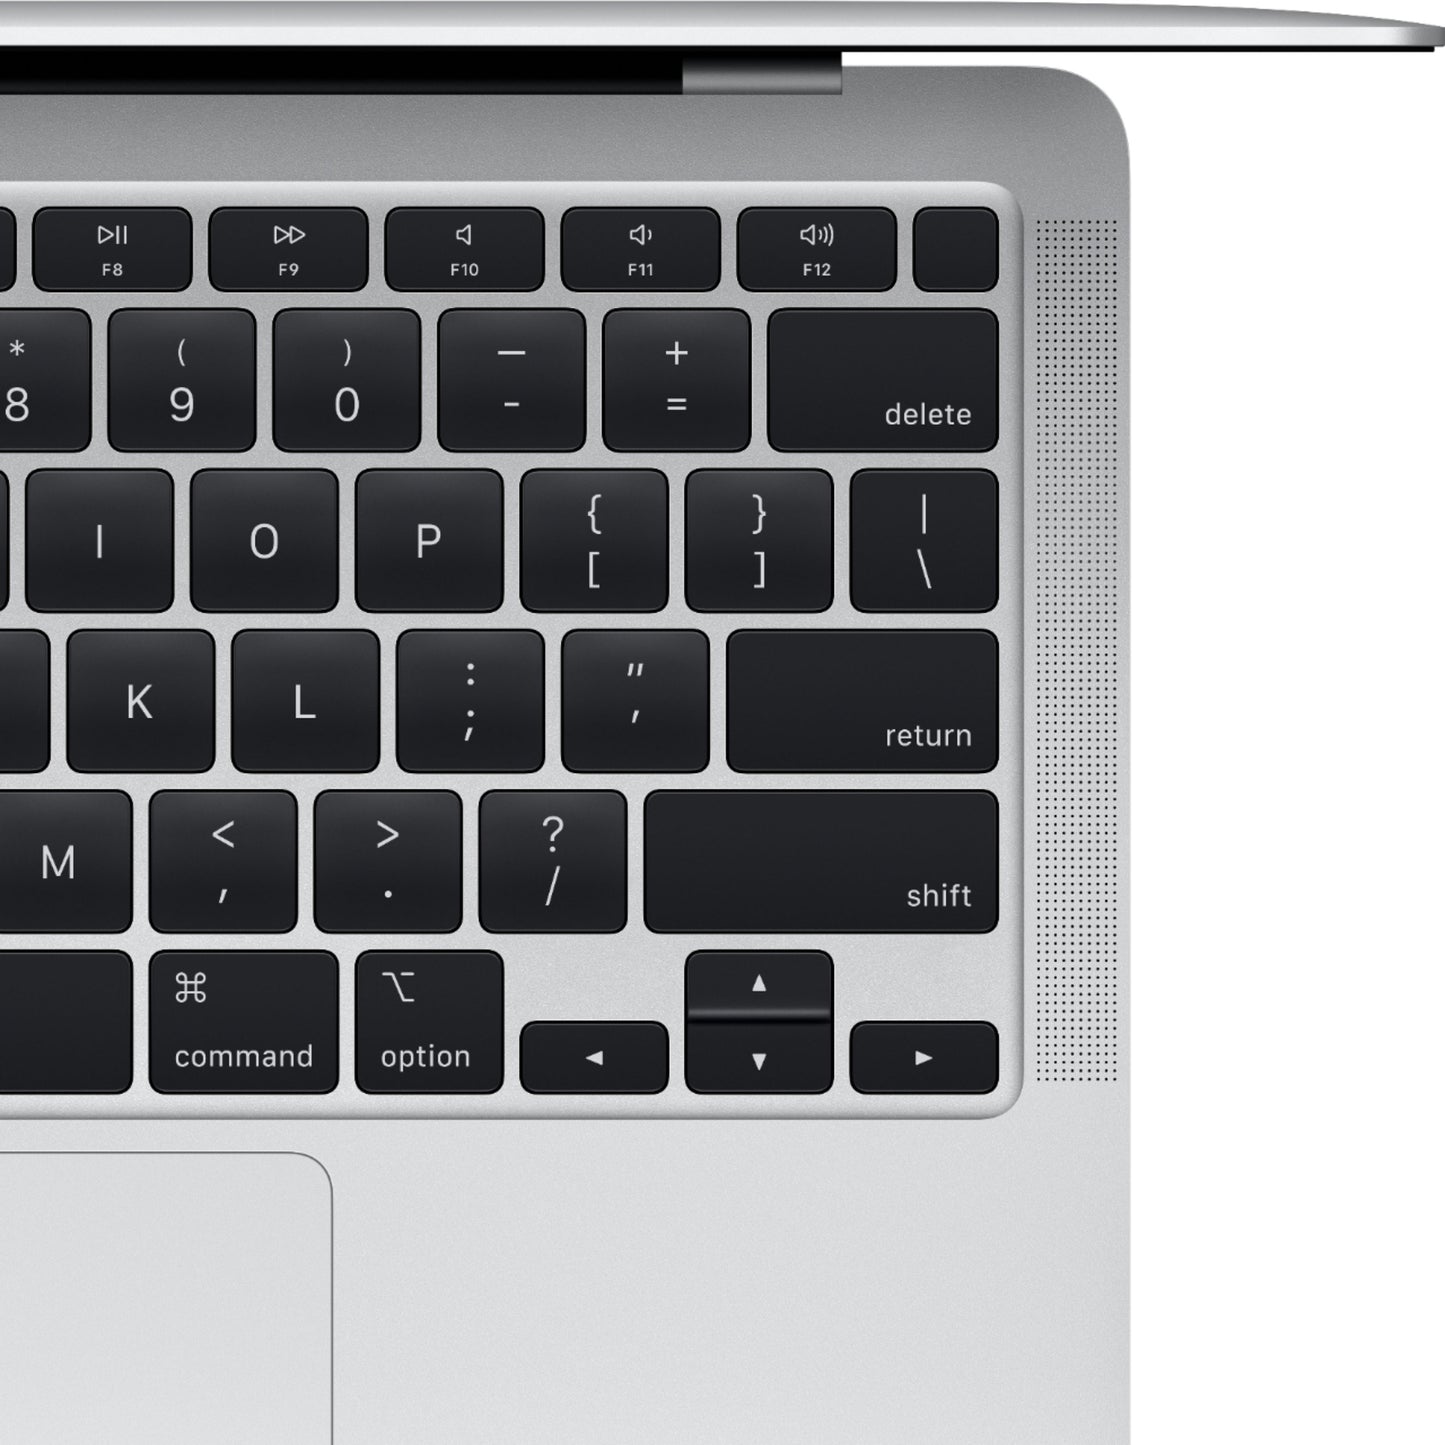 ~SALE~ New MacBook Air-2020 M1 Chip-256GB